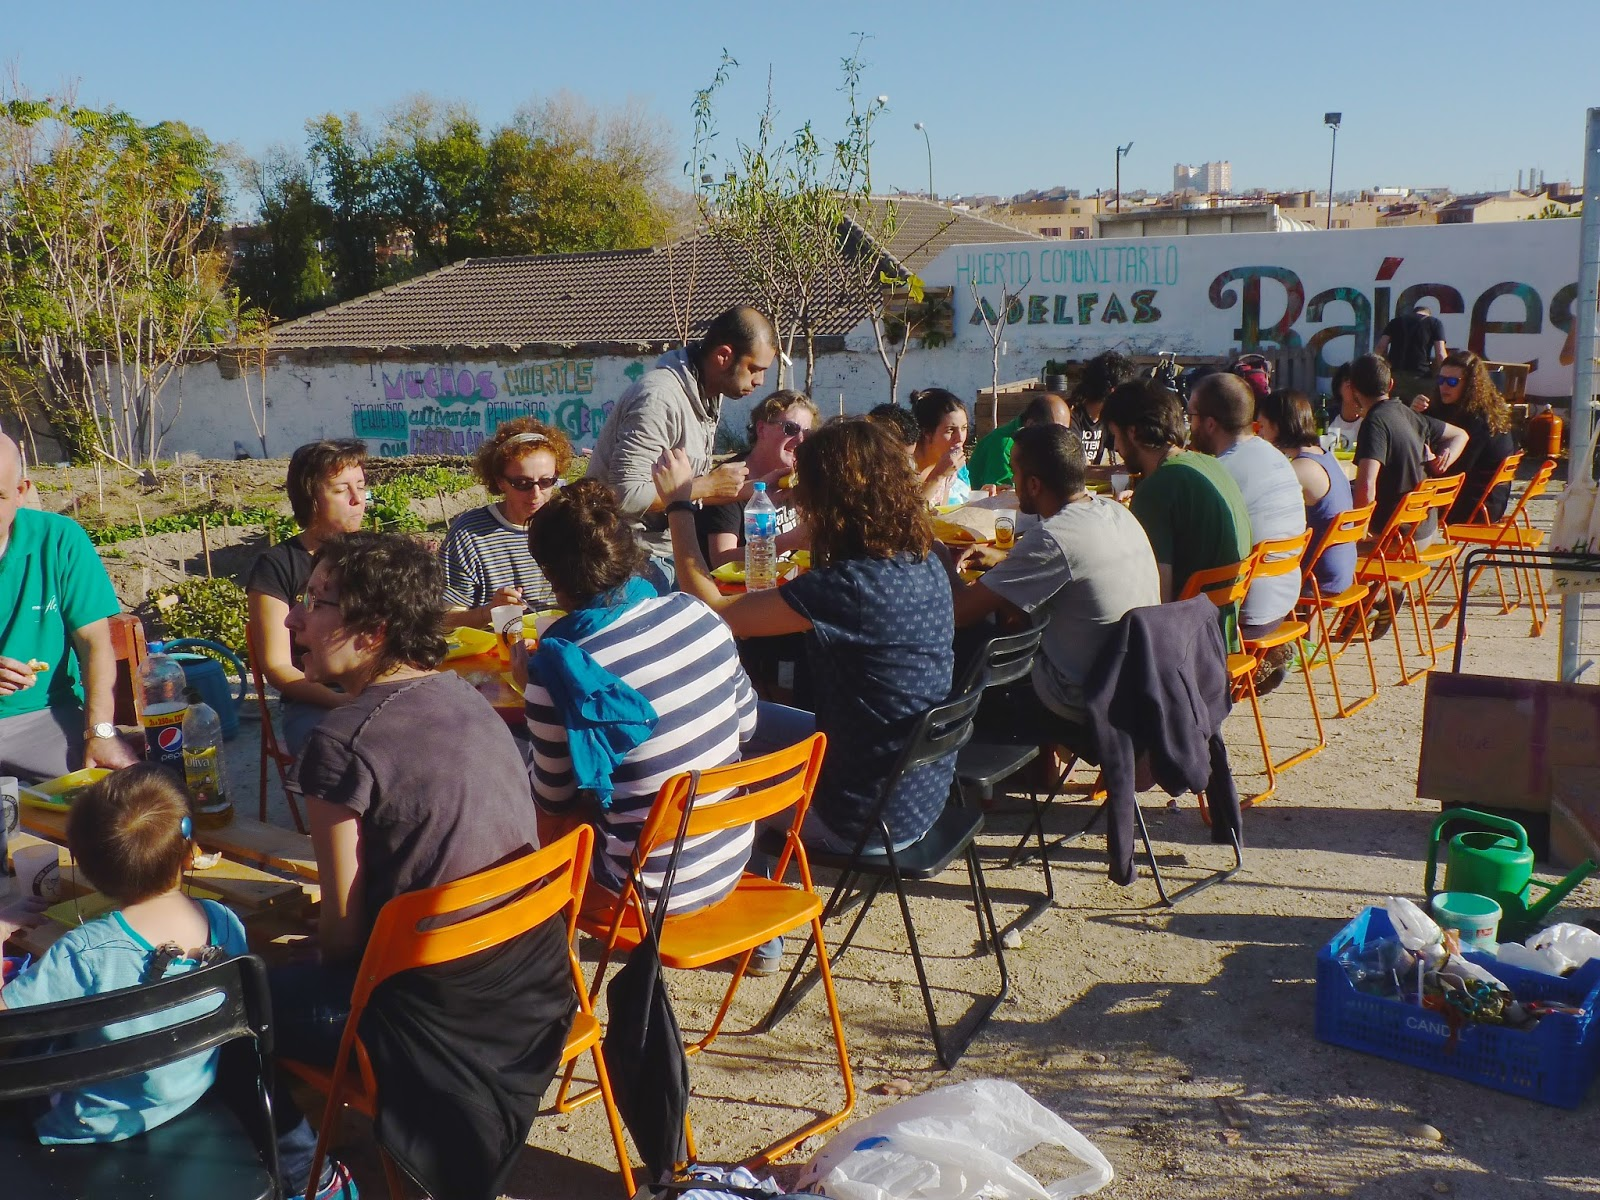 Photo of sharing a meal in Adelfas community garden. Credit: Alberto del Rio